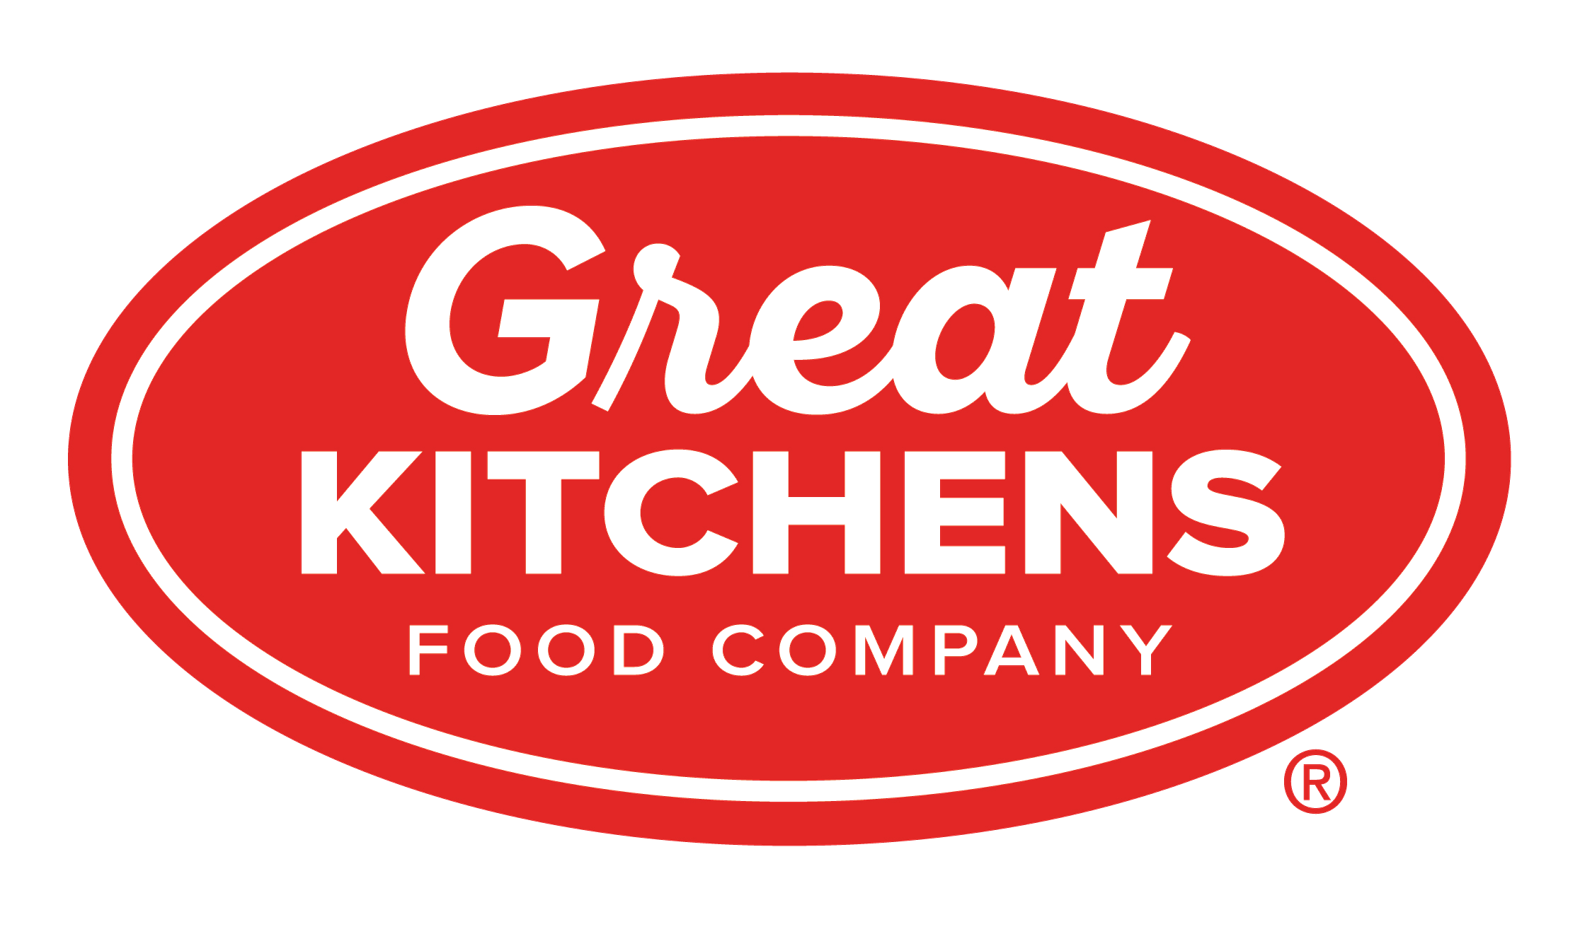 Great Kitchens Food Company